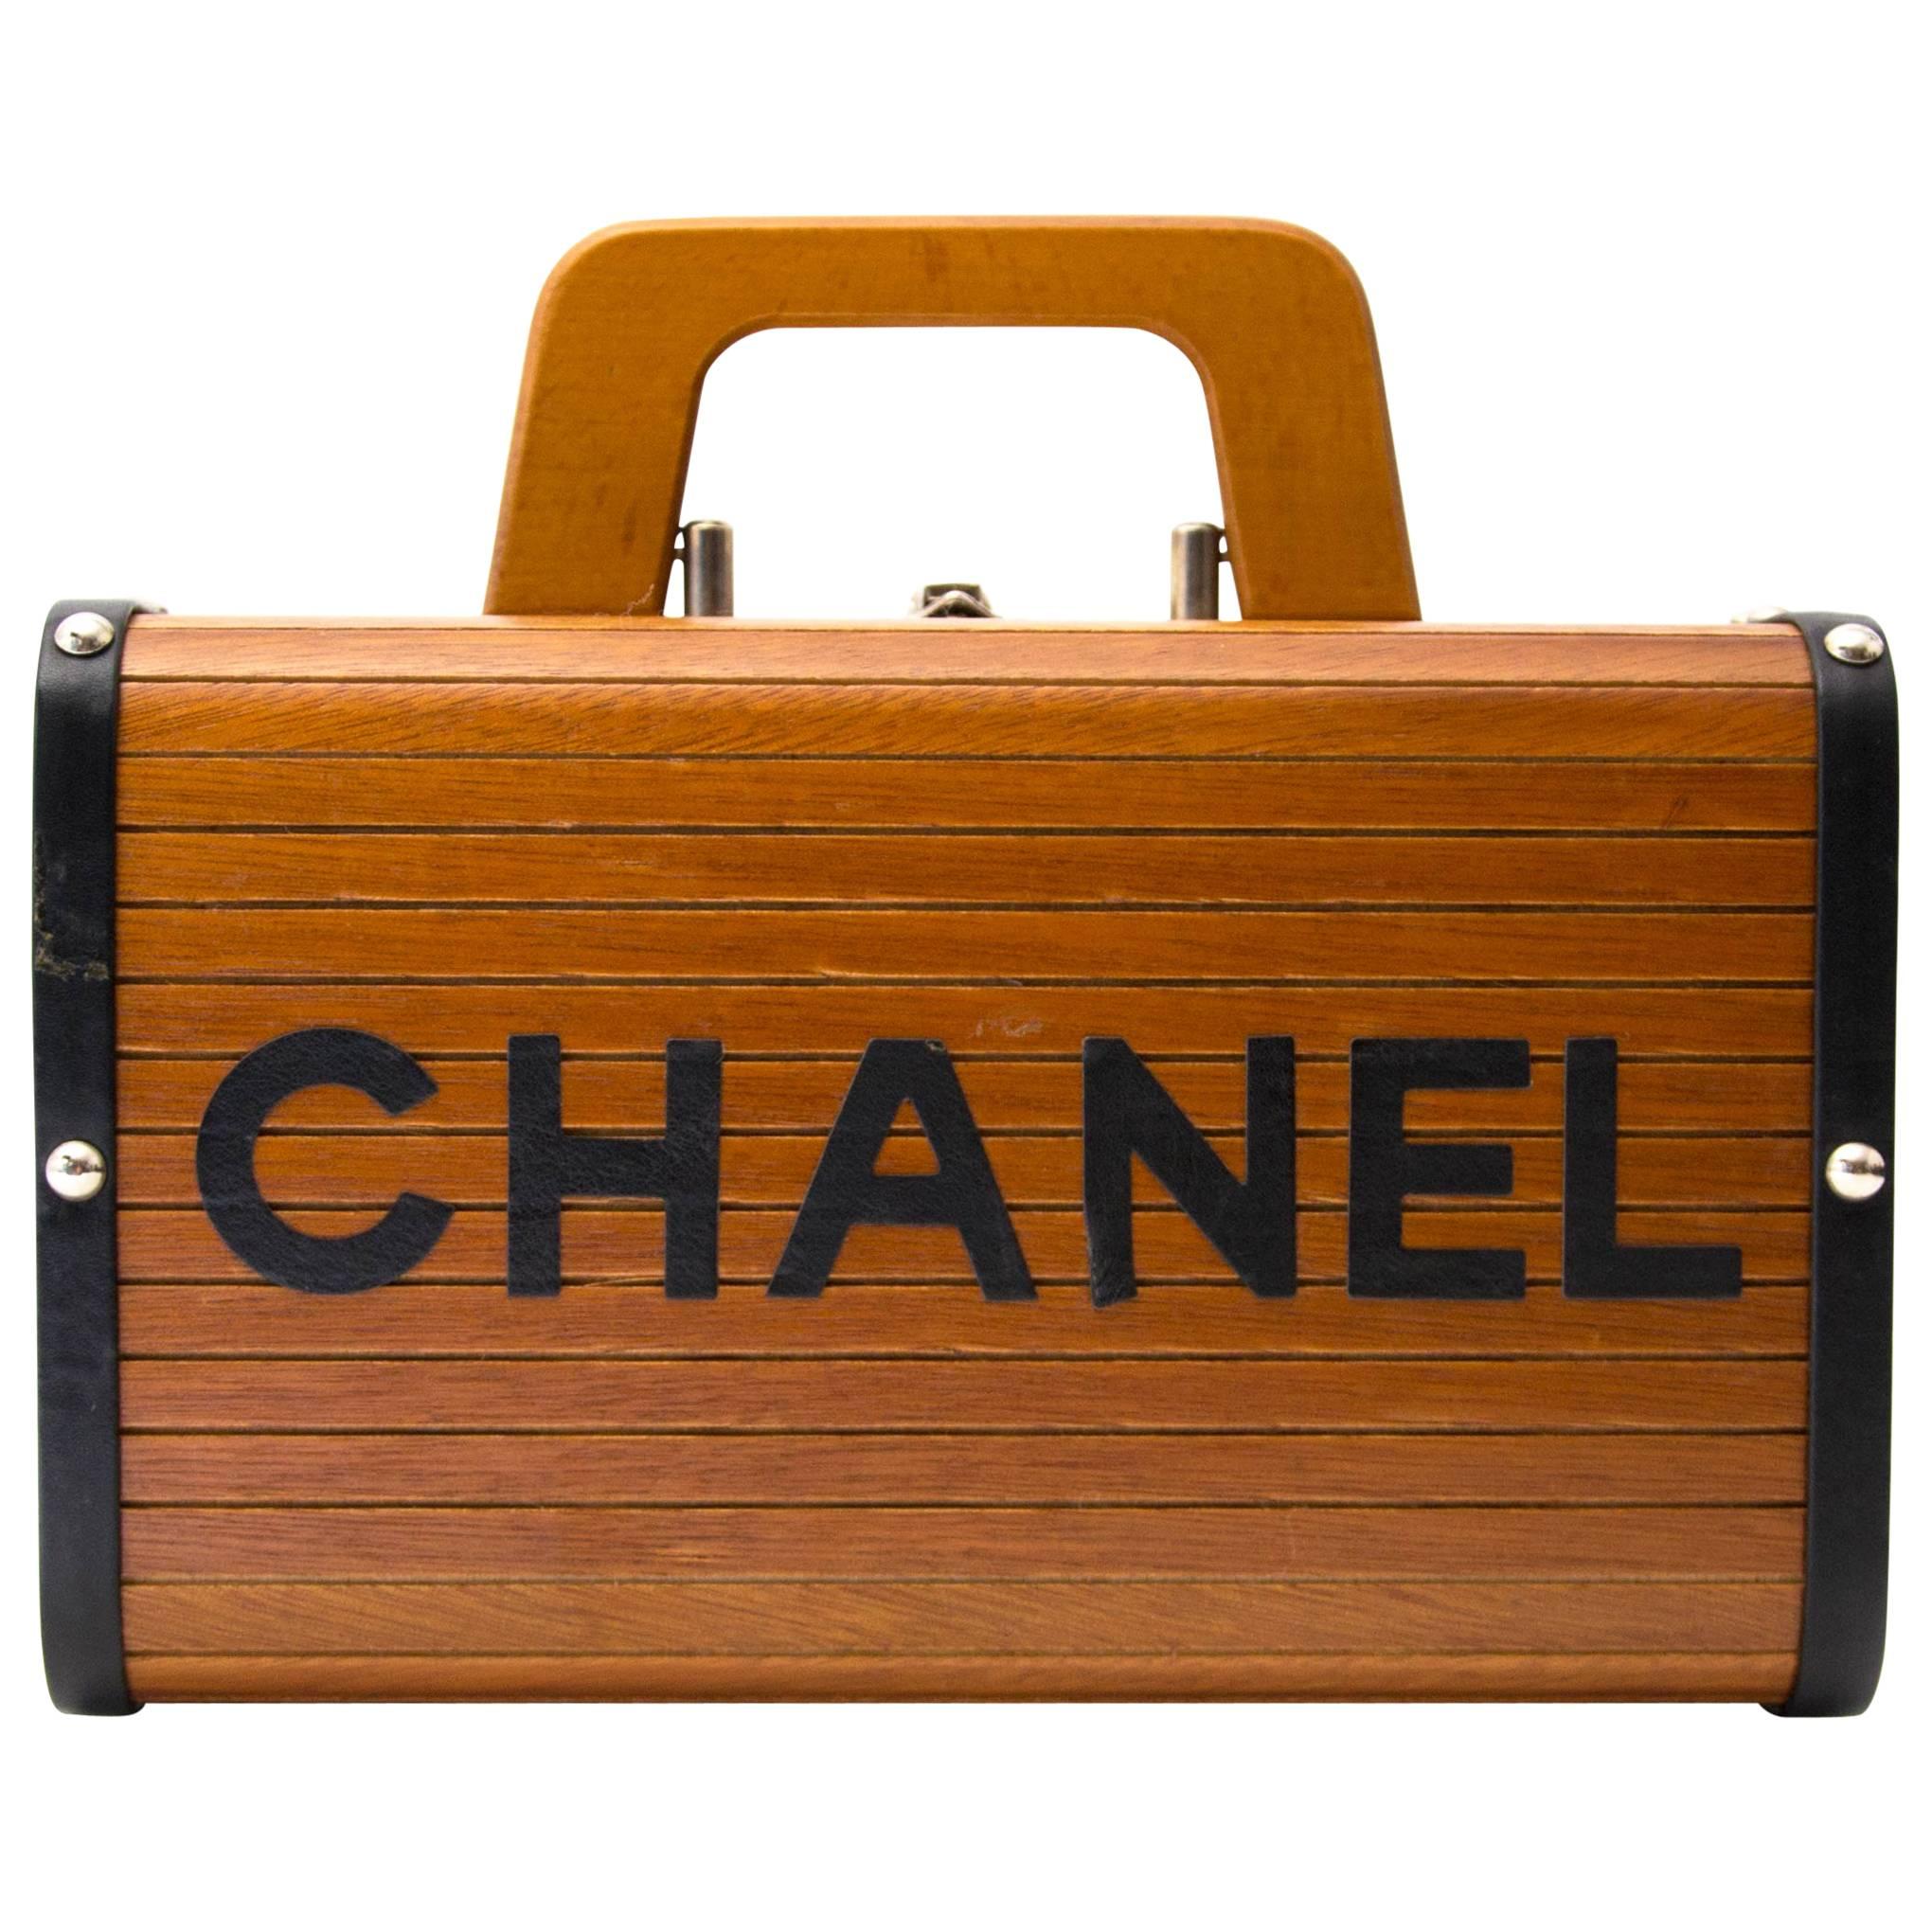 Chanel Limited Wooden Leather Trunk Case Handbag